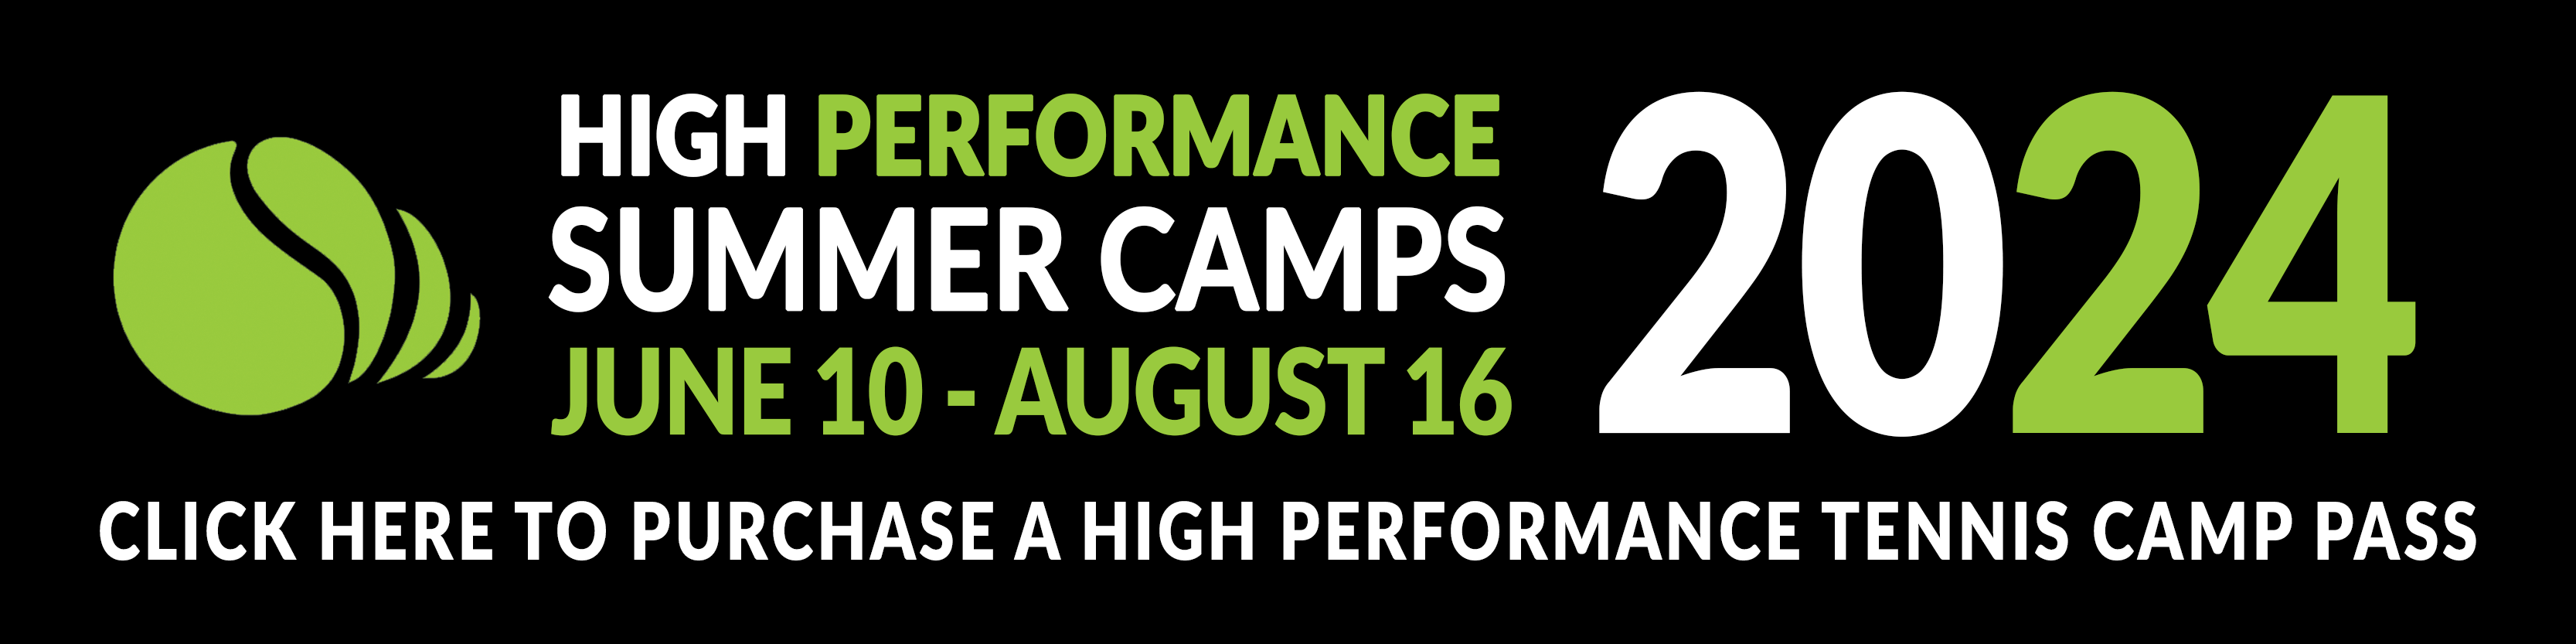 Wheaton Sport Center high performance camp summer header